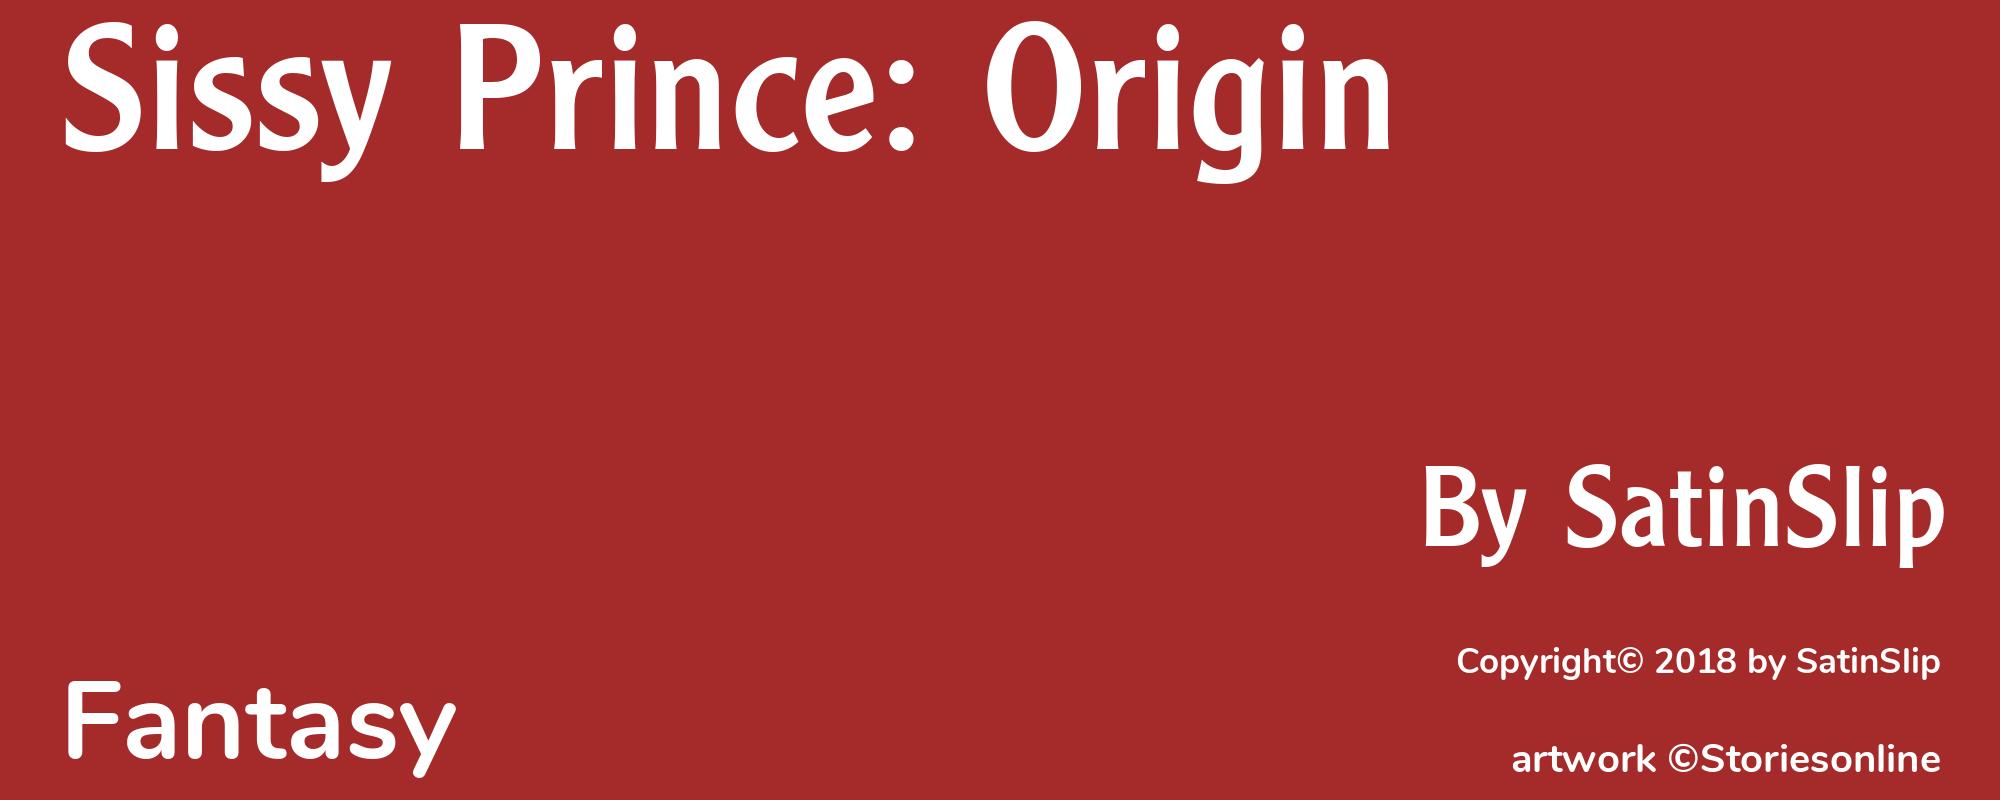 Sissy Prince: Origin - Cover